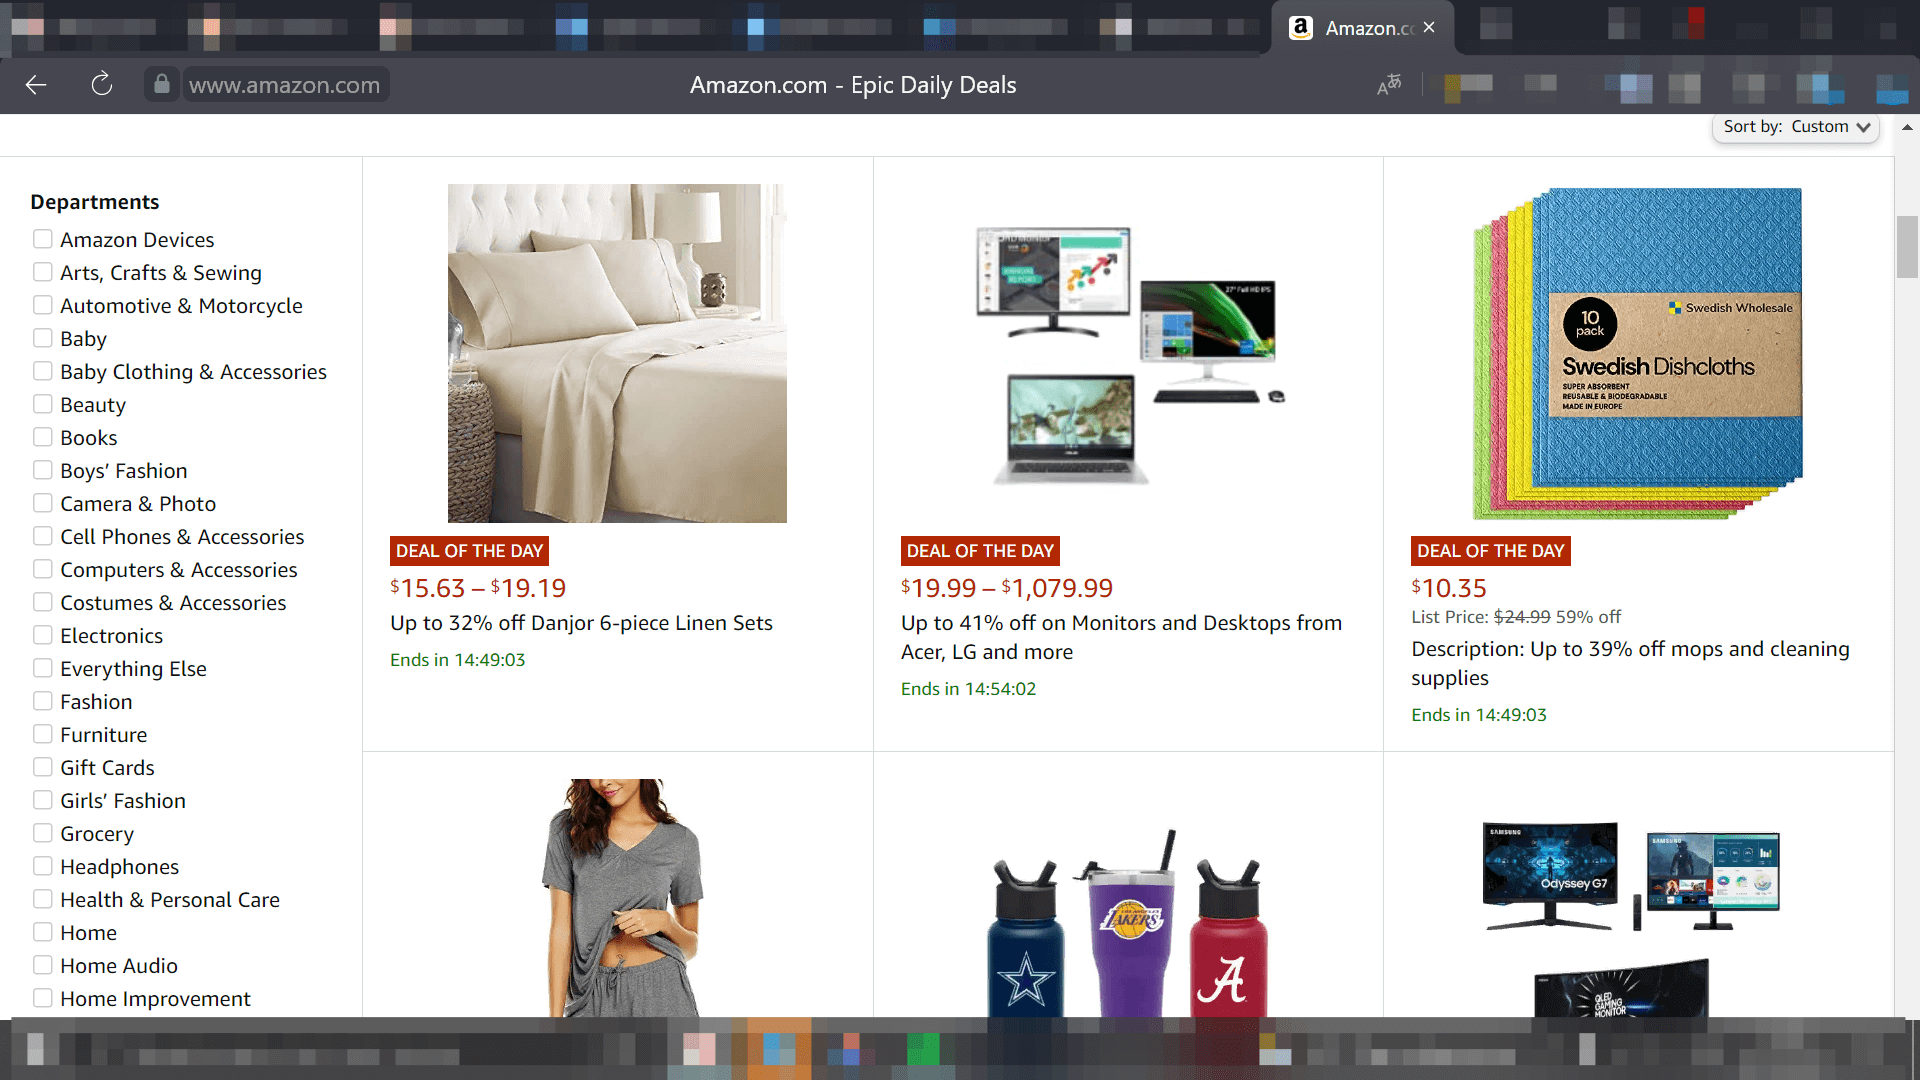 Amazon is an example of online retailer